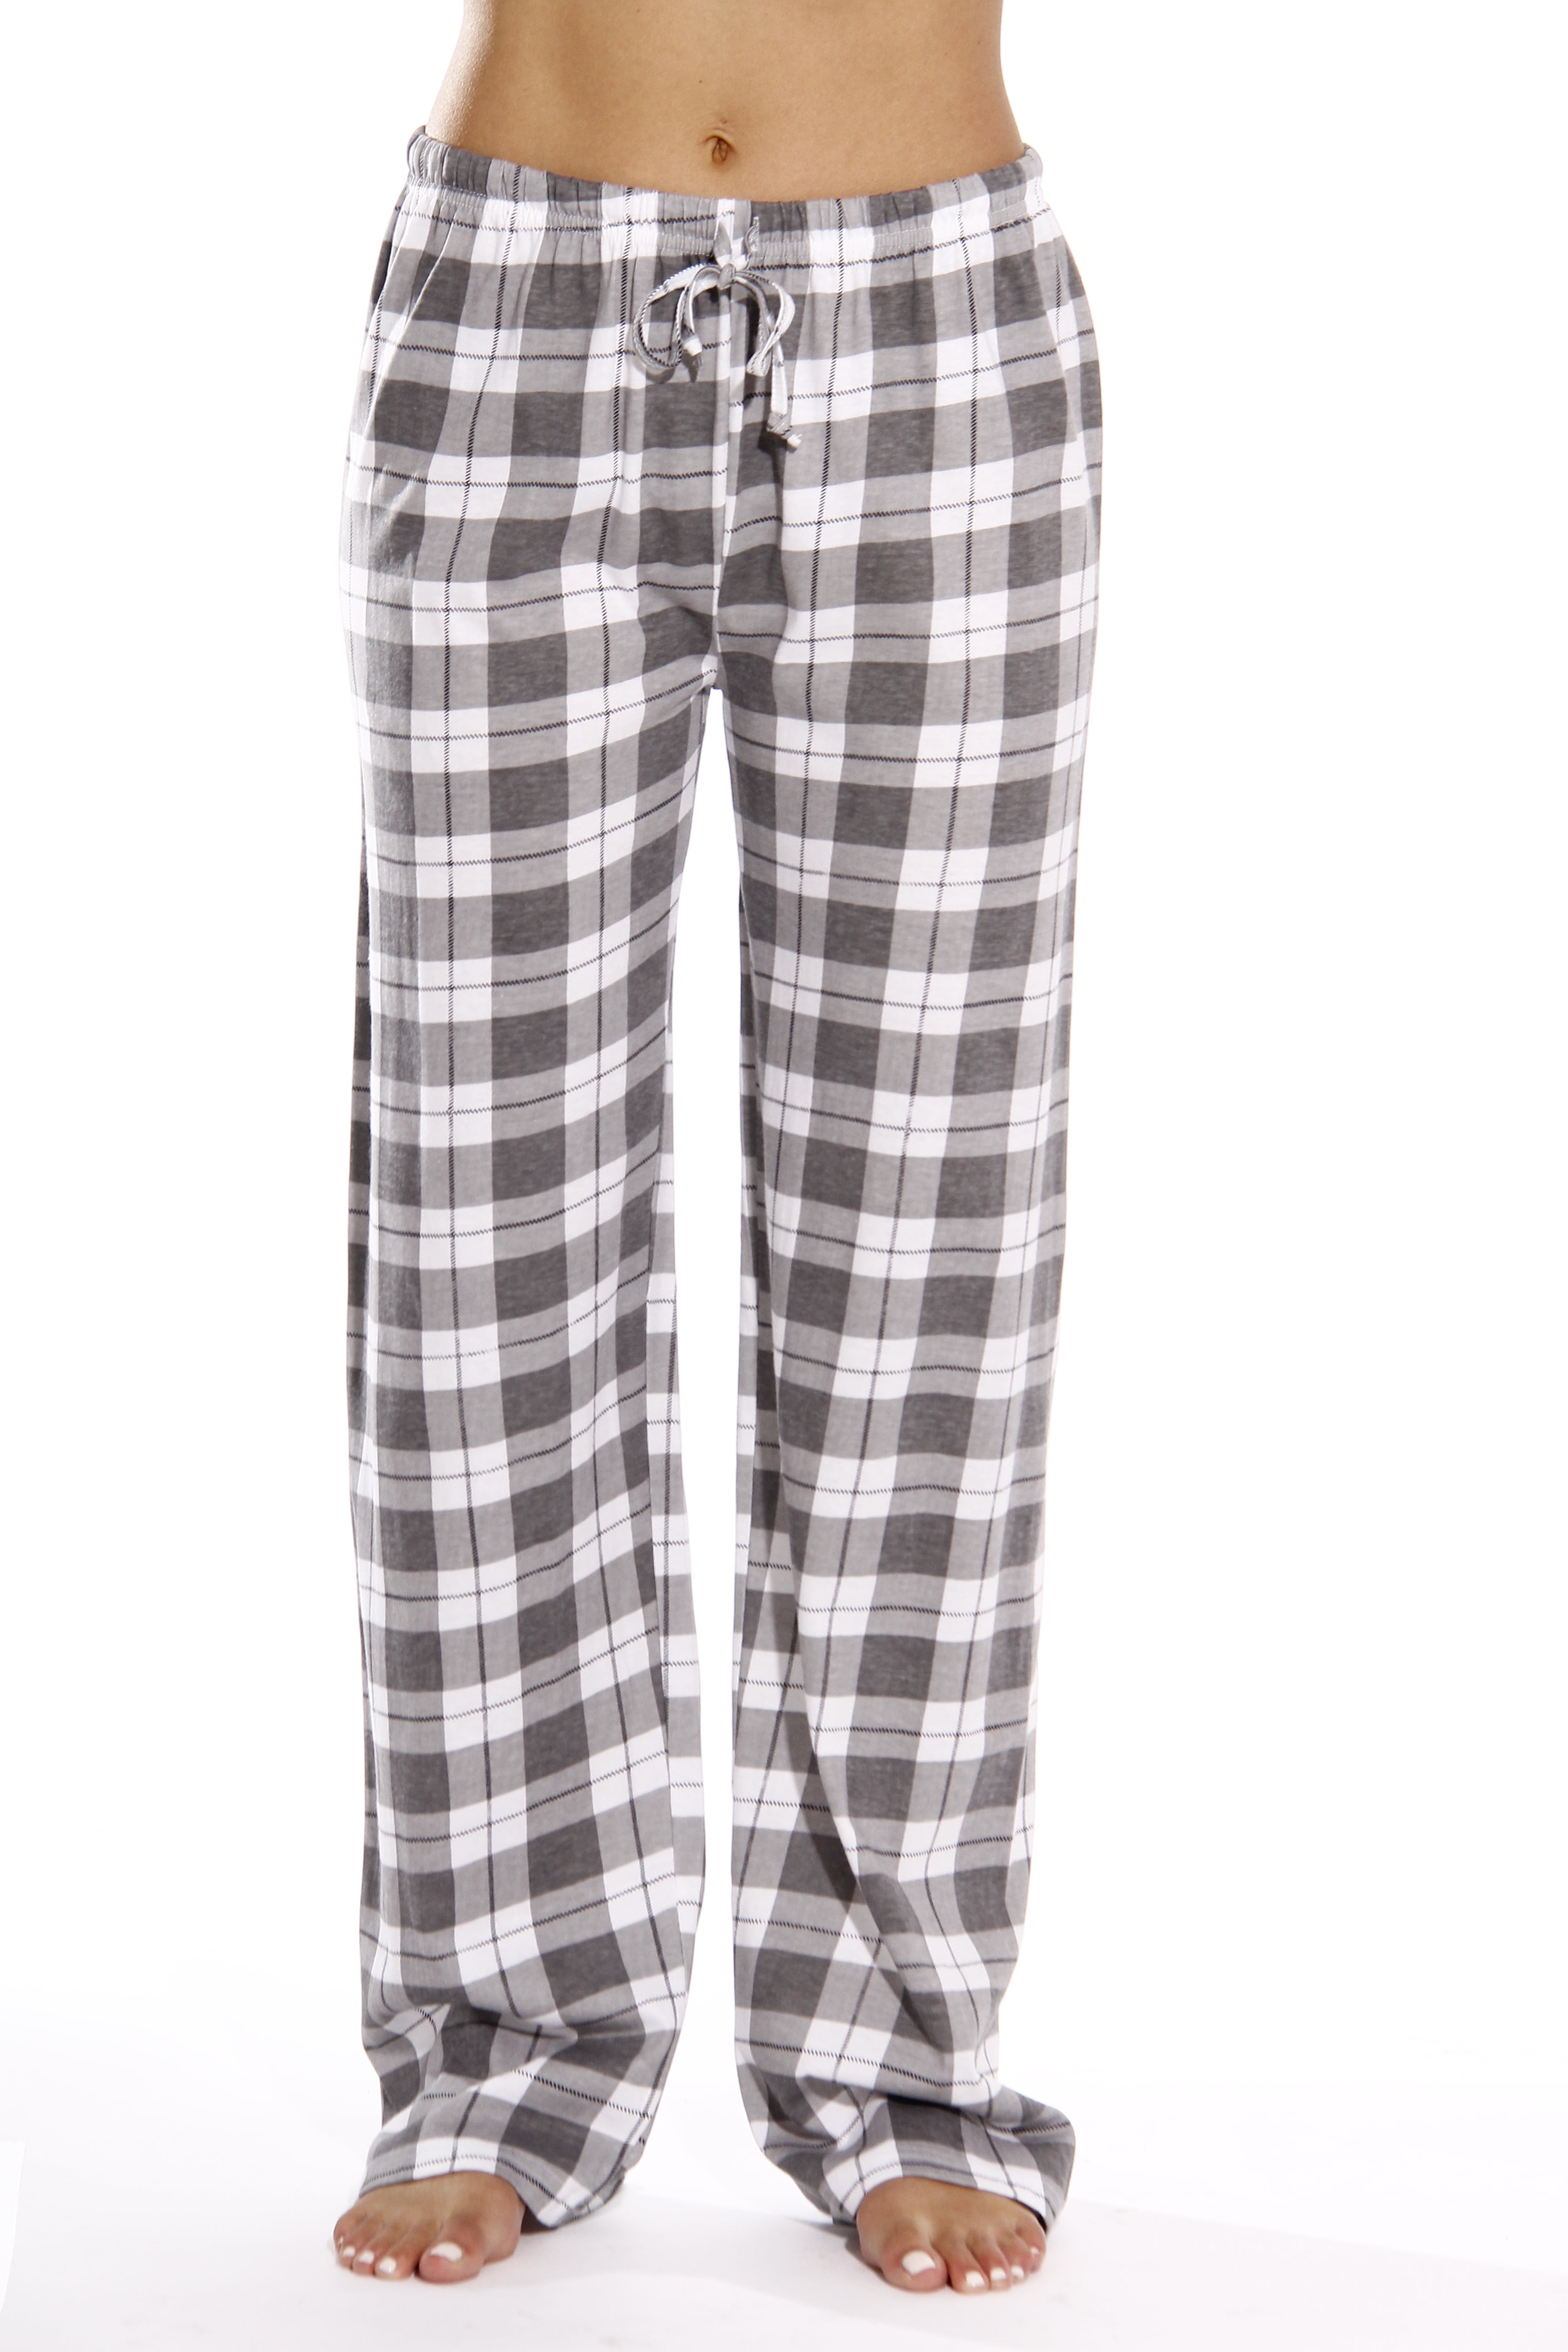 Just Love - Just Love Plaid Pajama Pants Cotton Jersey (Grey - Plaid, X ...